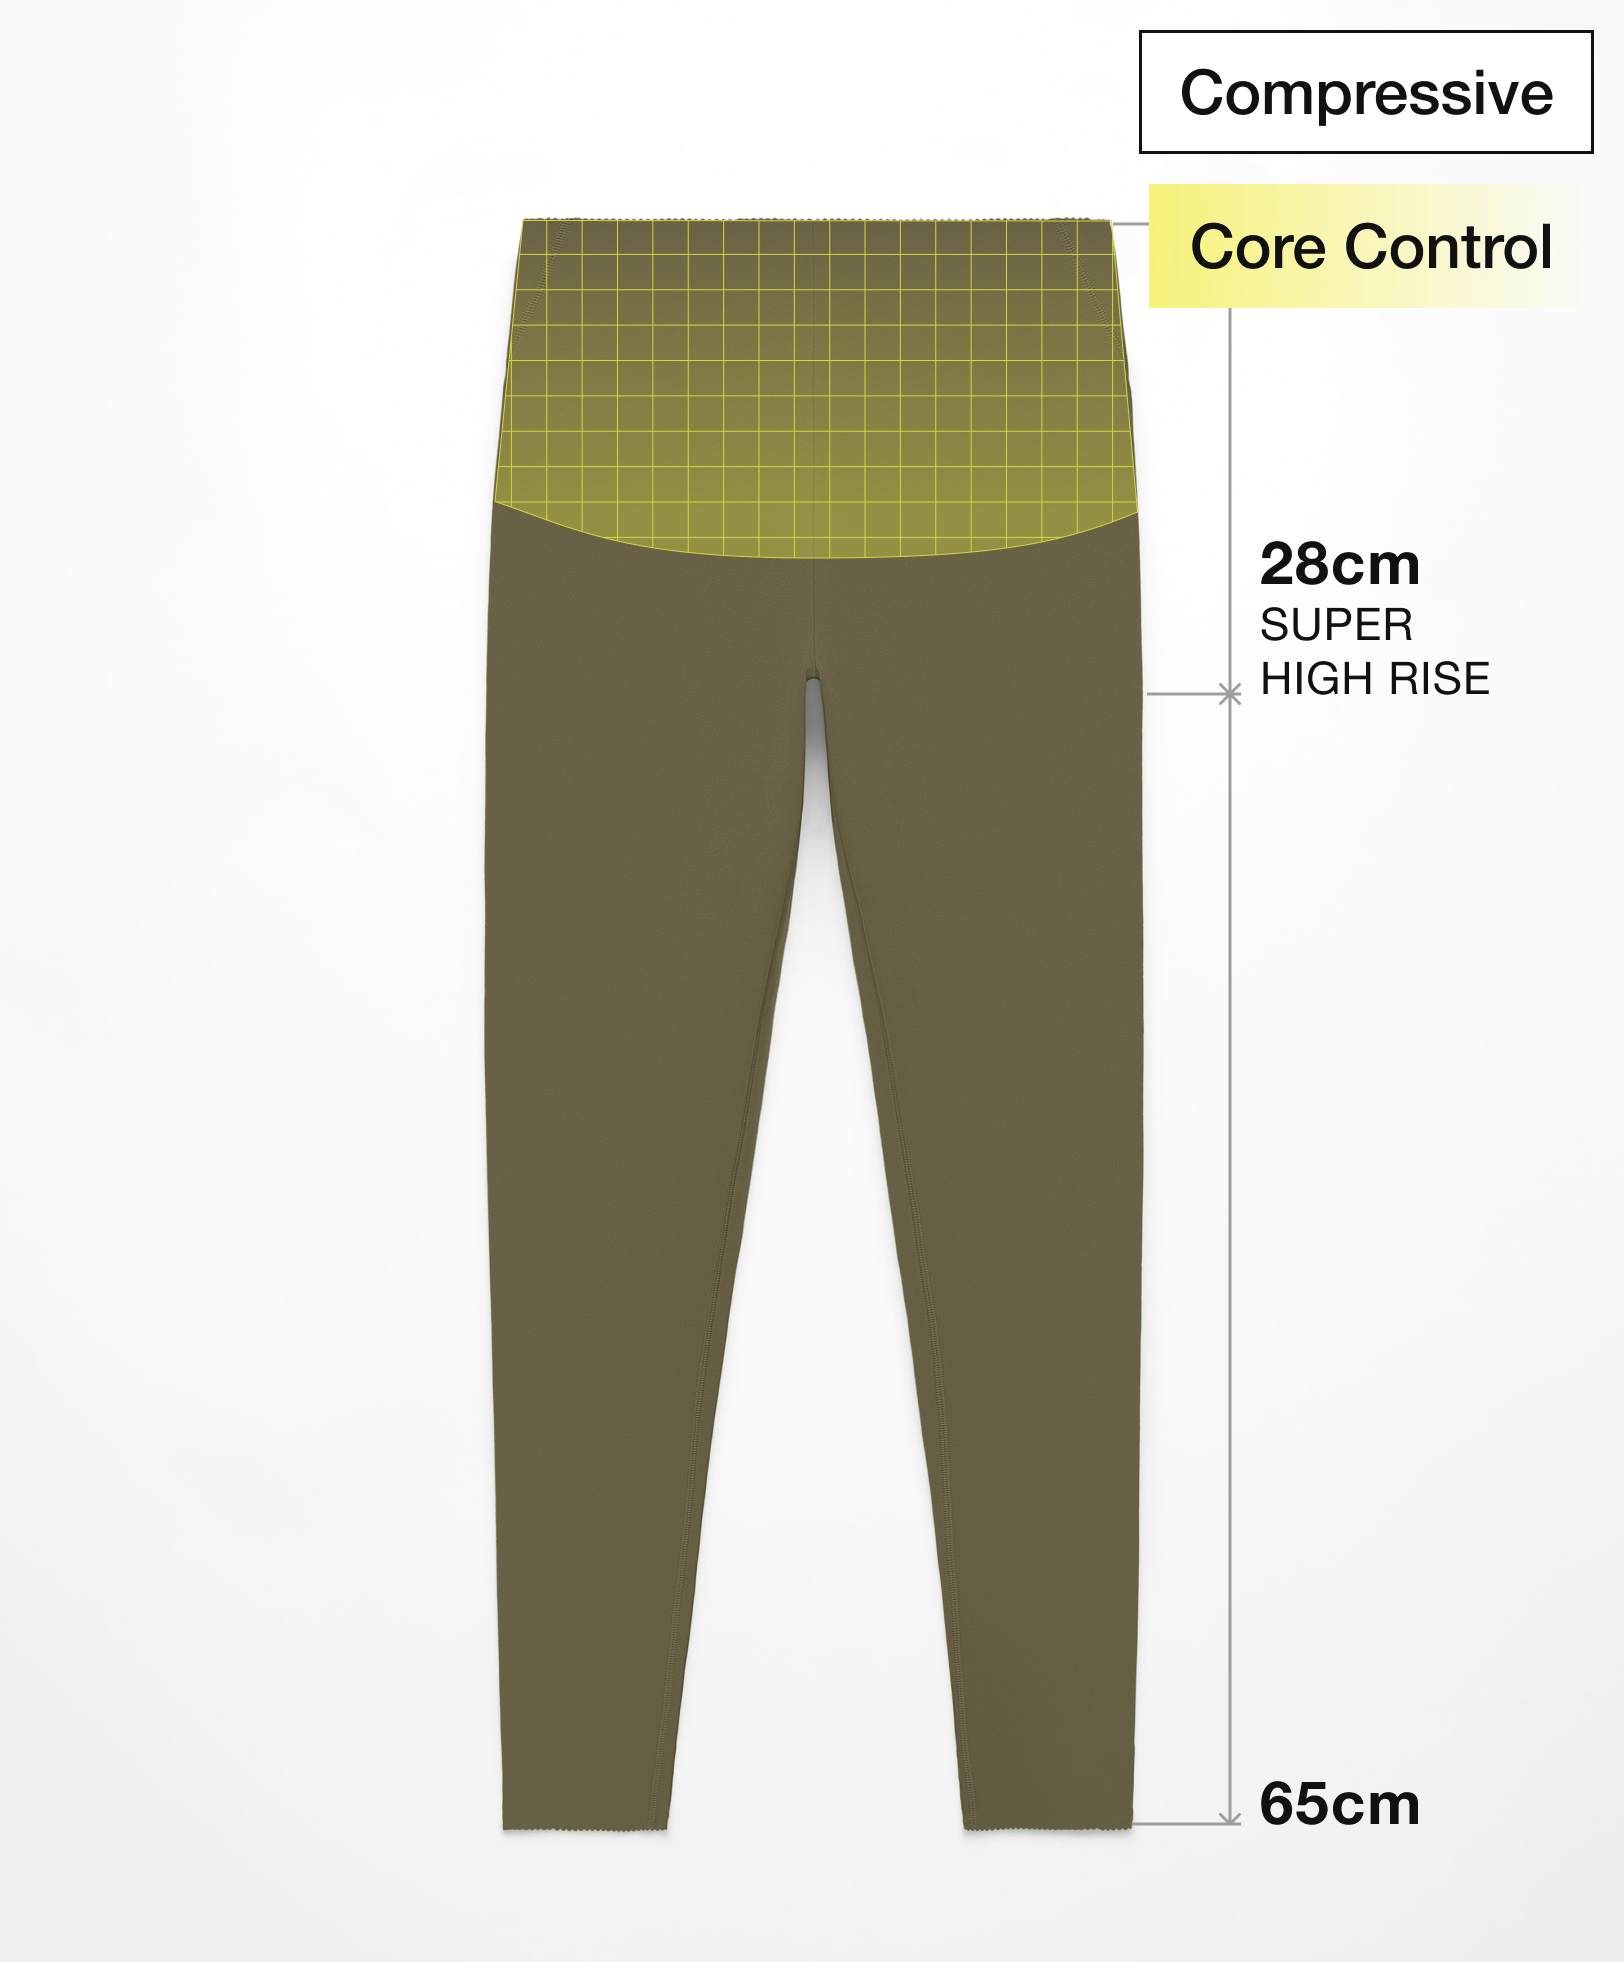 Core Control Compressive super-high-rise leggings